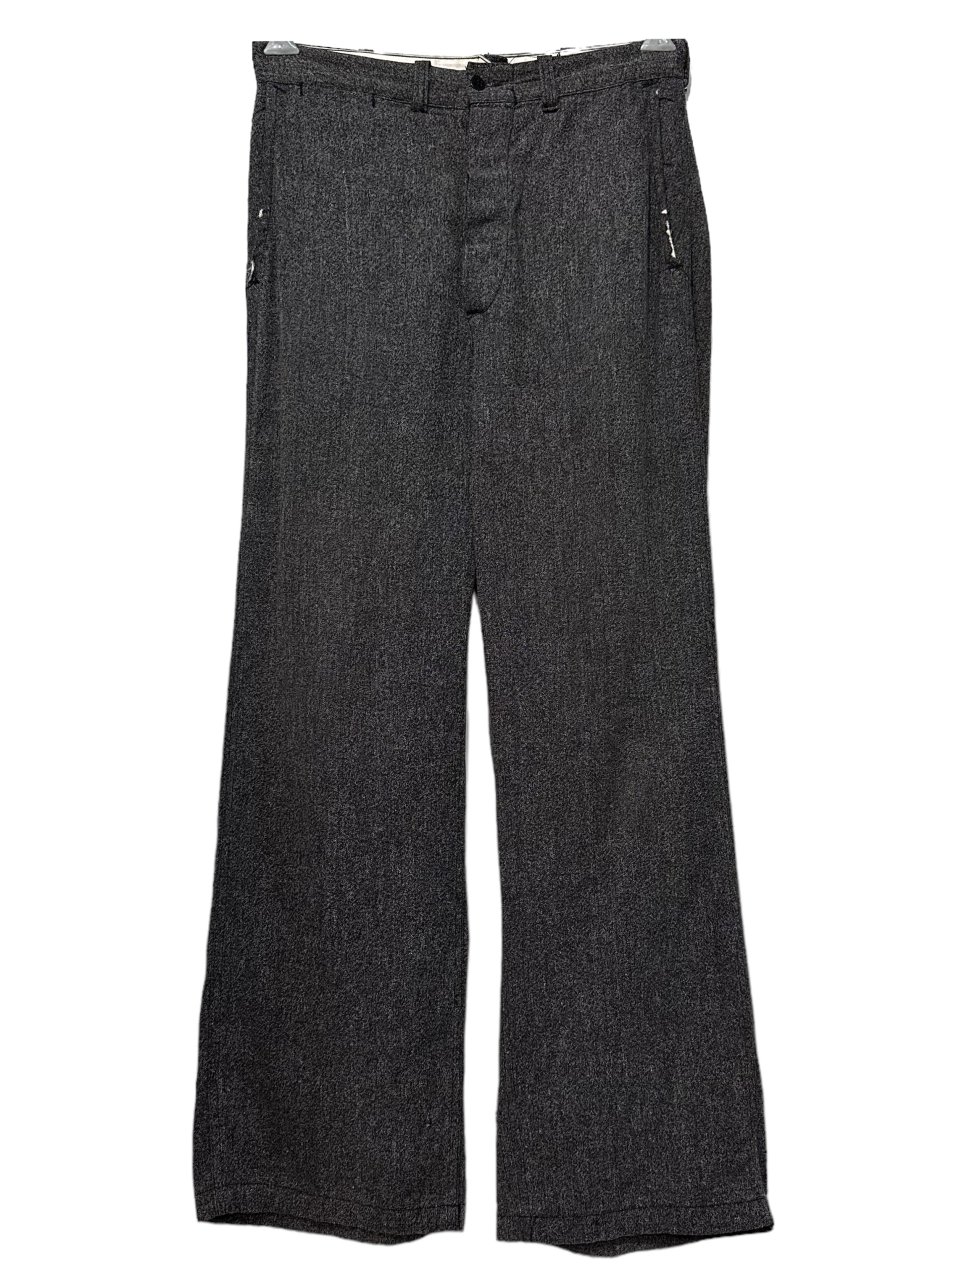 40s~50s Vintage Black Chambray Work Pants 黒 W31×L30 ブラックシャンブレー ワークパンツ 黒シャン  ヴィンテージ 古着 - NEWJOKE ONLINE STORE